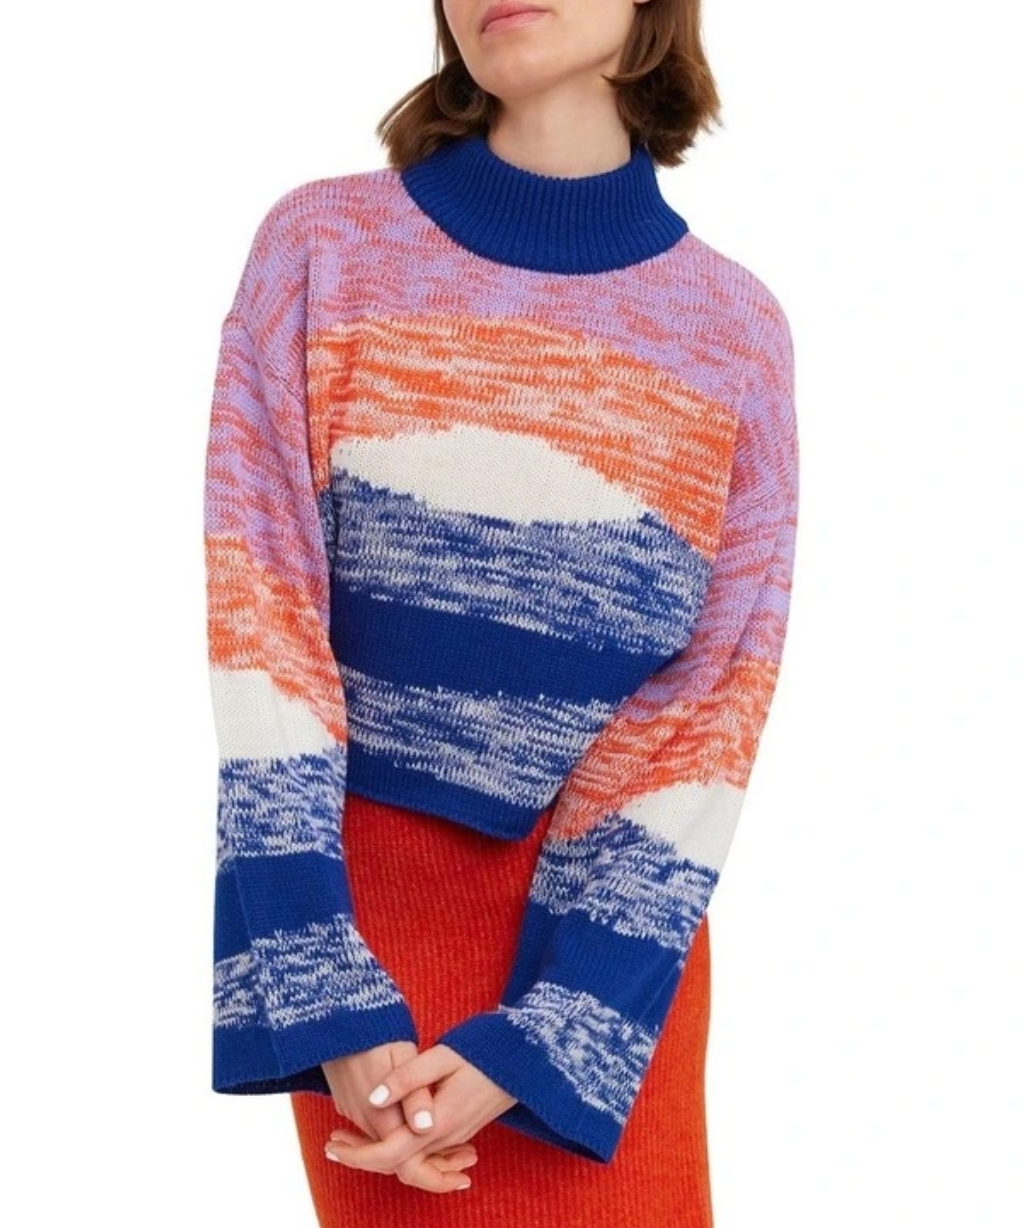 Vero Moda Doris High Neck Seweater